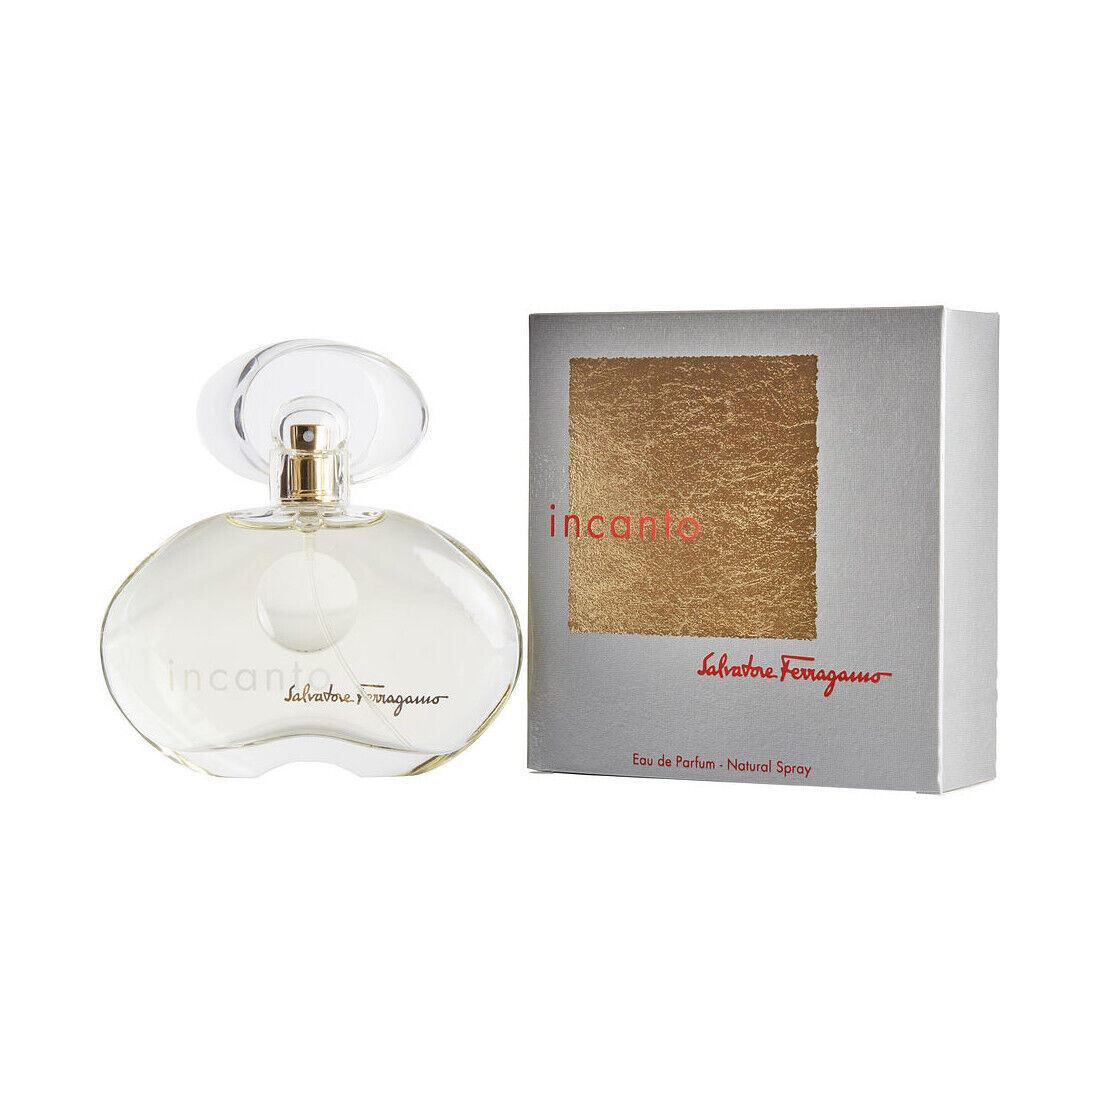 Incanto Por Salvatore Ferragamo 50ml / 50 ML Eau de Parfum Spray para Mujer - $23.29